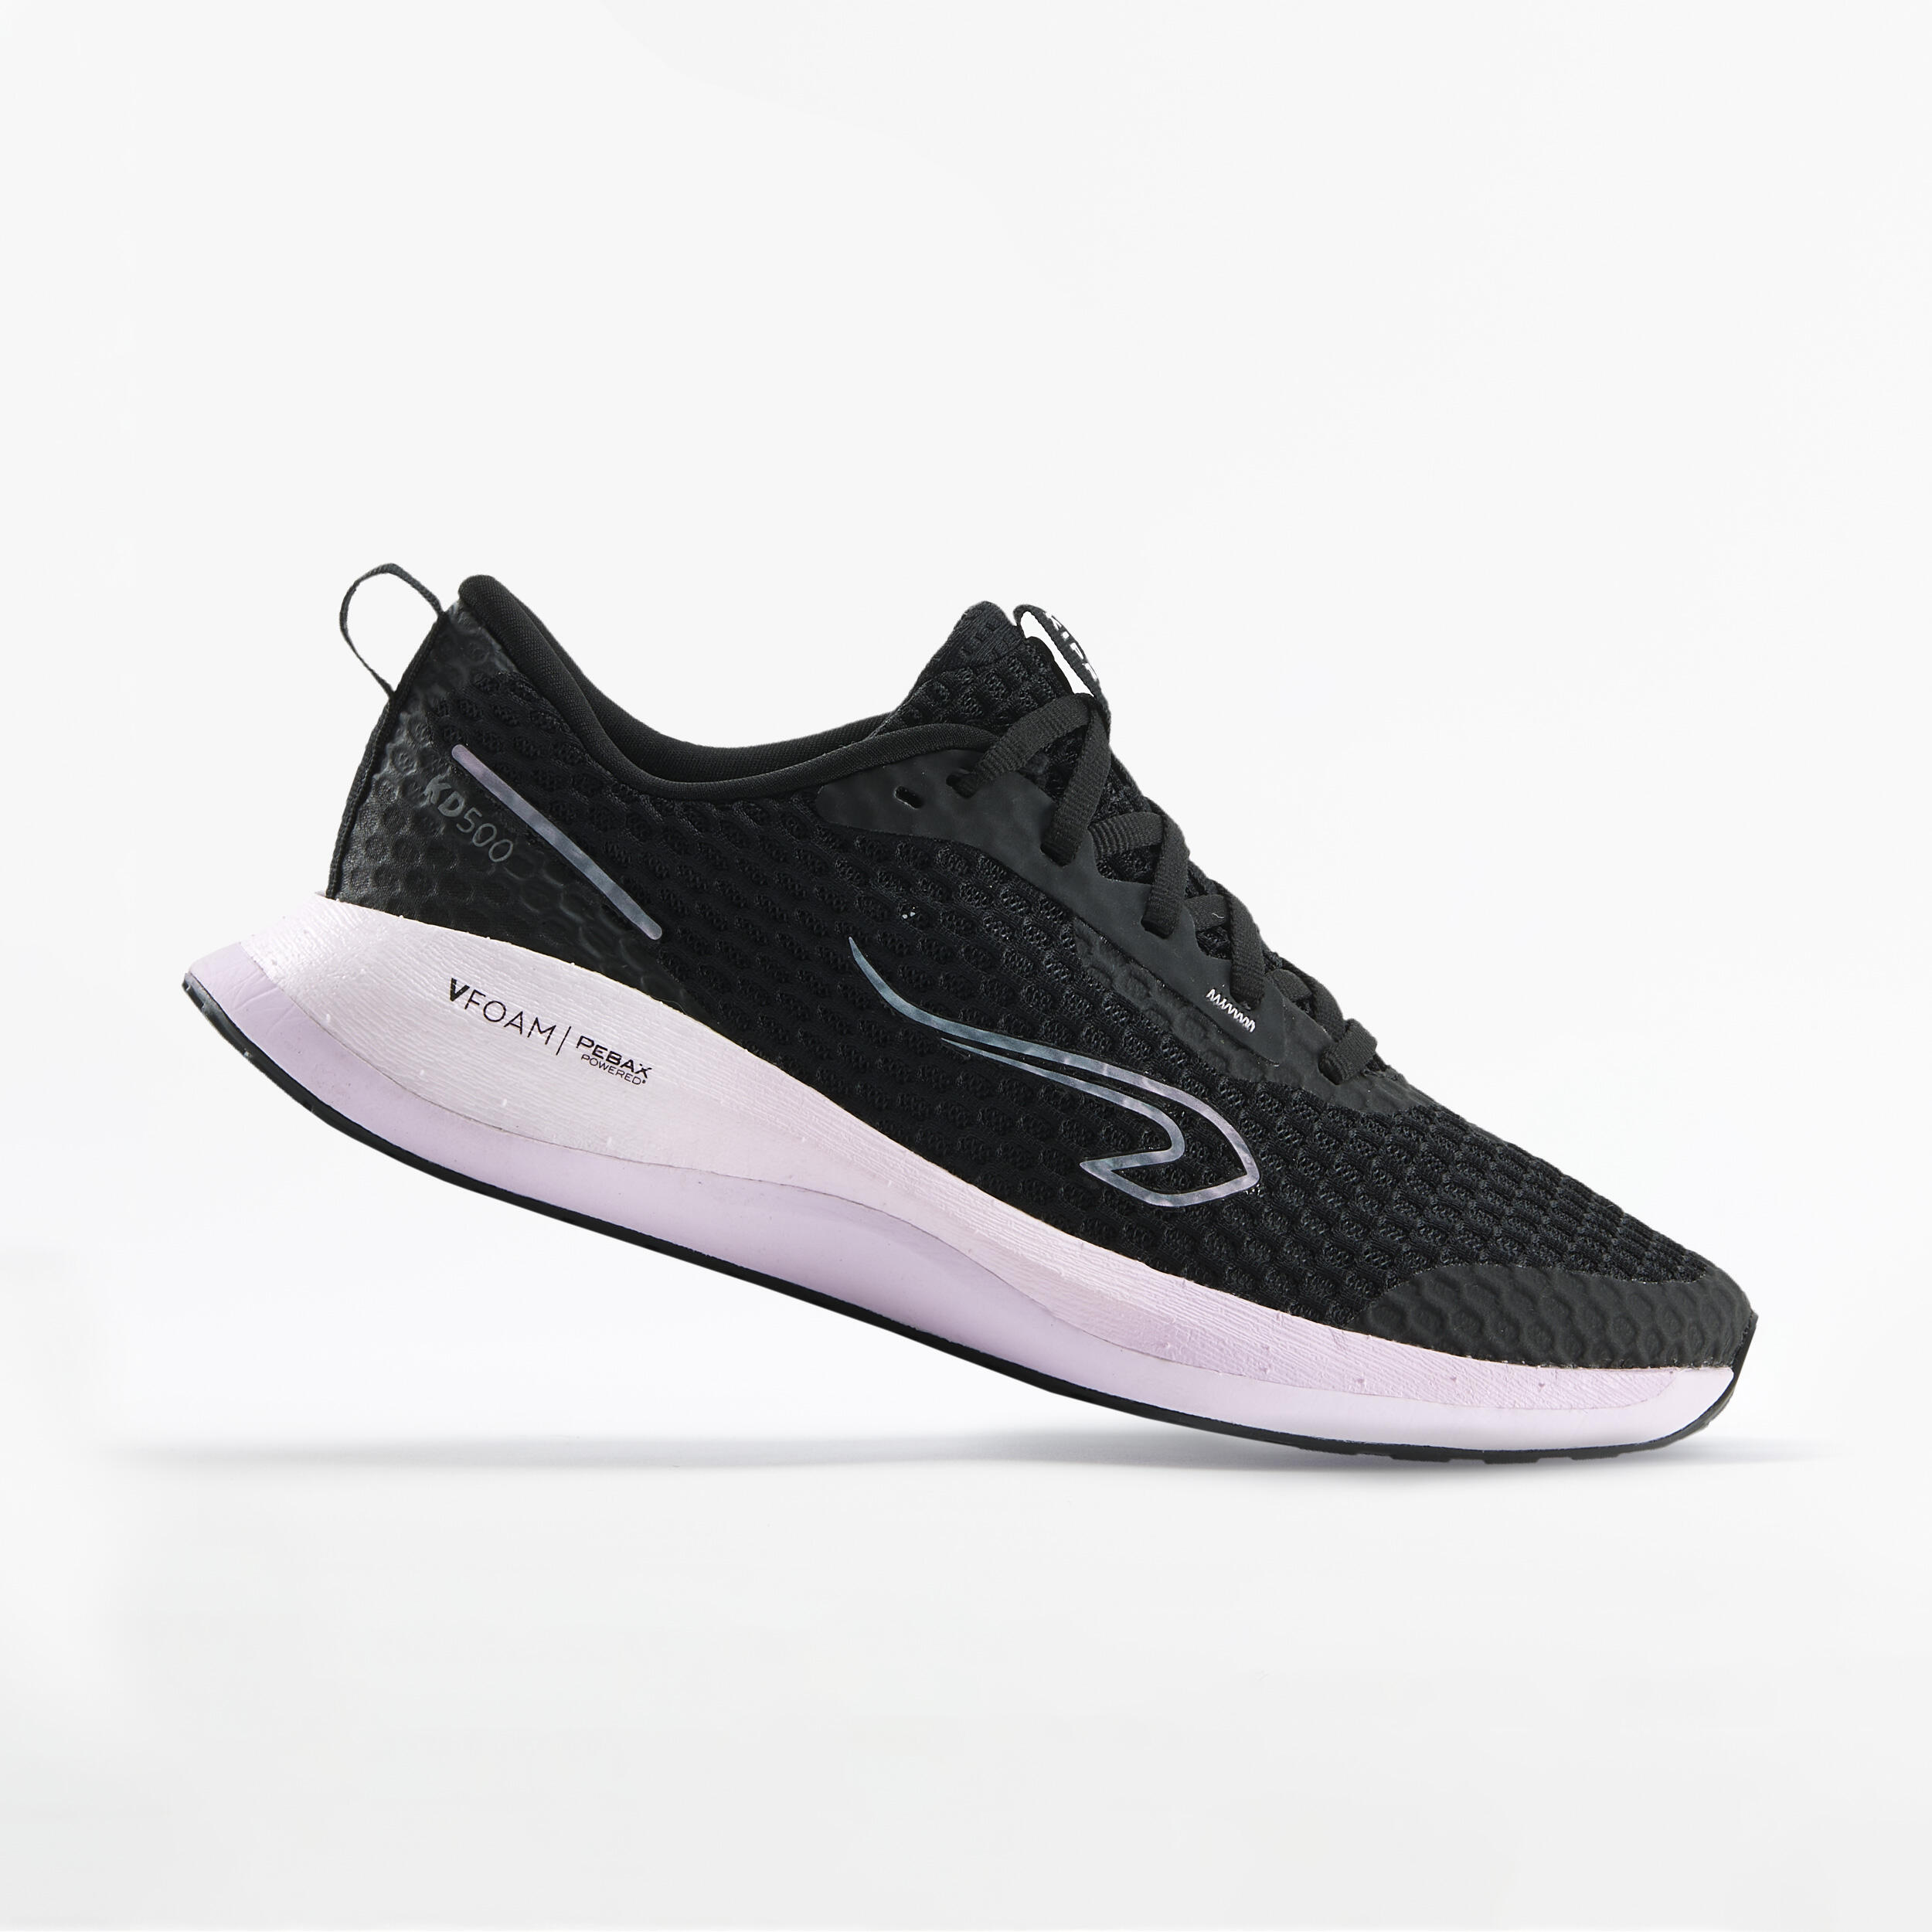 KIPRUN KD500 2 women's running shoes - black/mauve 1/8